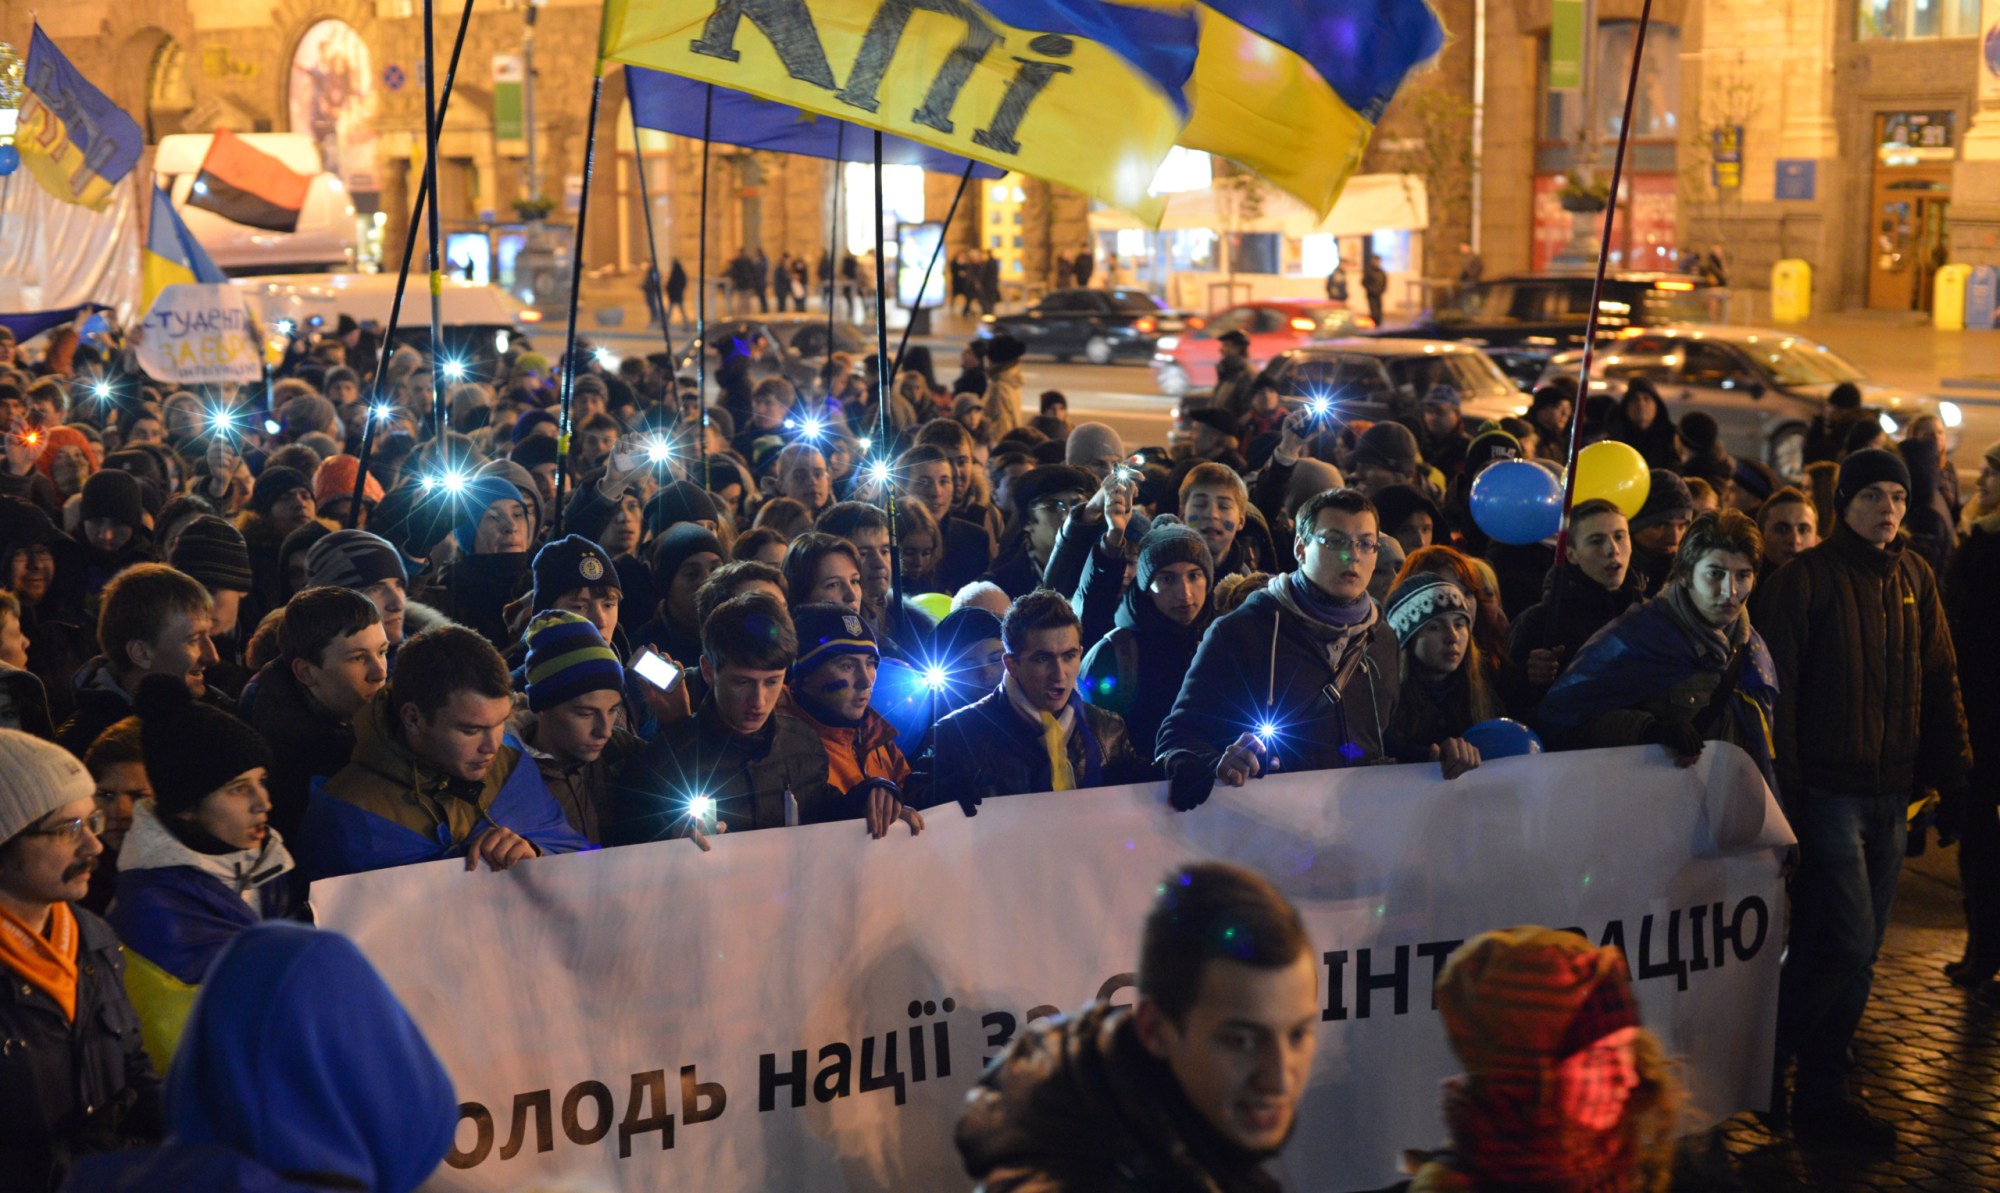 Activists gather in Kiev, Ukraine, on November 28 to protest the government of President Viktor Yanukovych. (Flickr/mac_ivan)